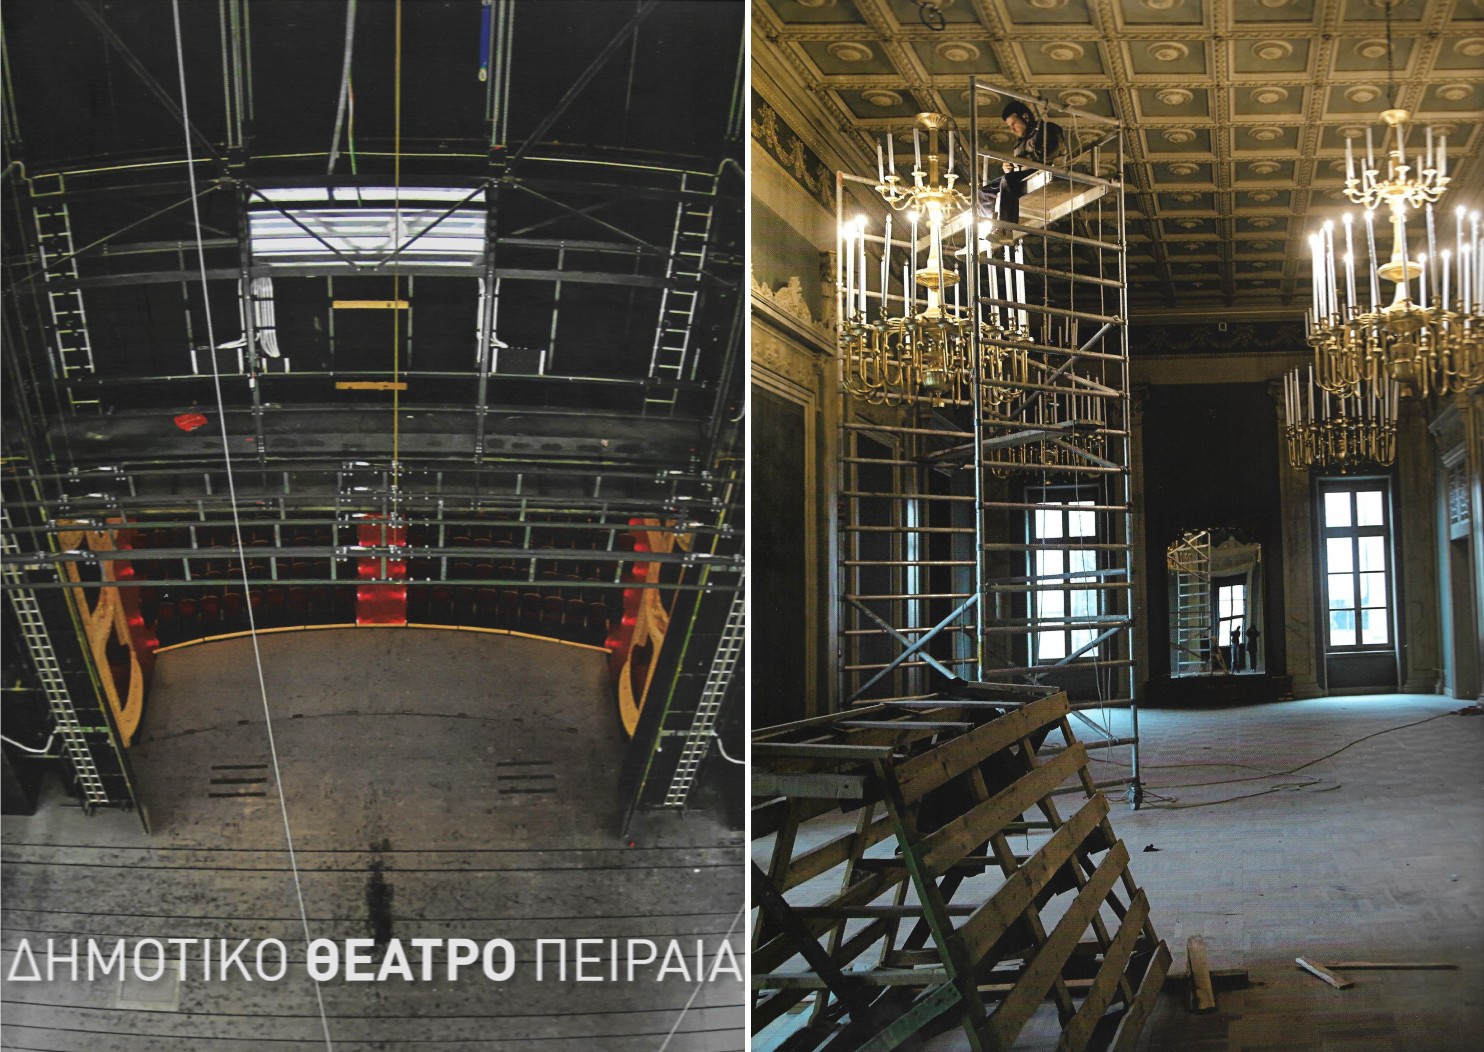 Piraeus Public Theatre Restoration, Benaki Publication 2013  “History of Construction”, written by A.Zournatzi & G.Laskaris